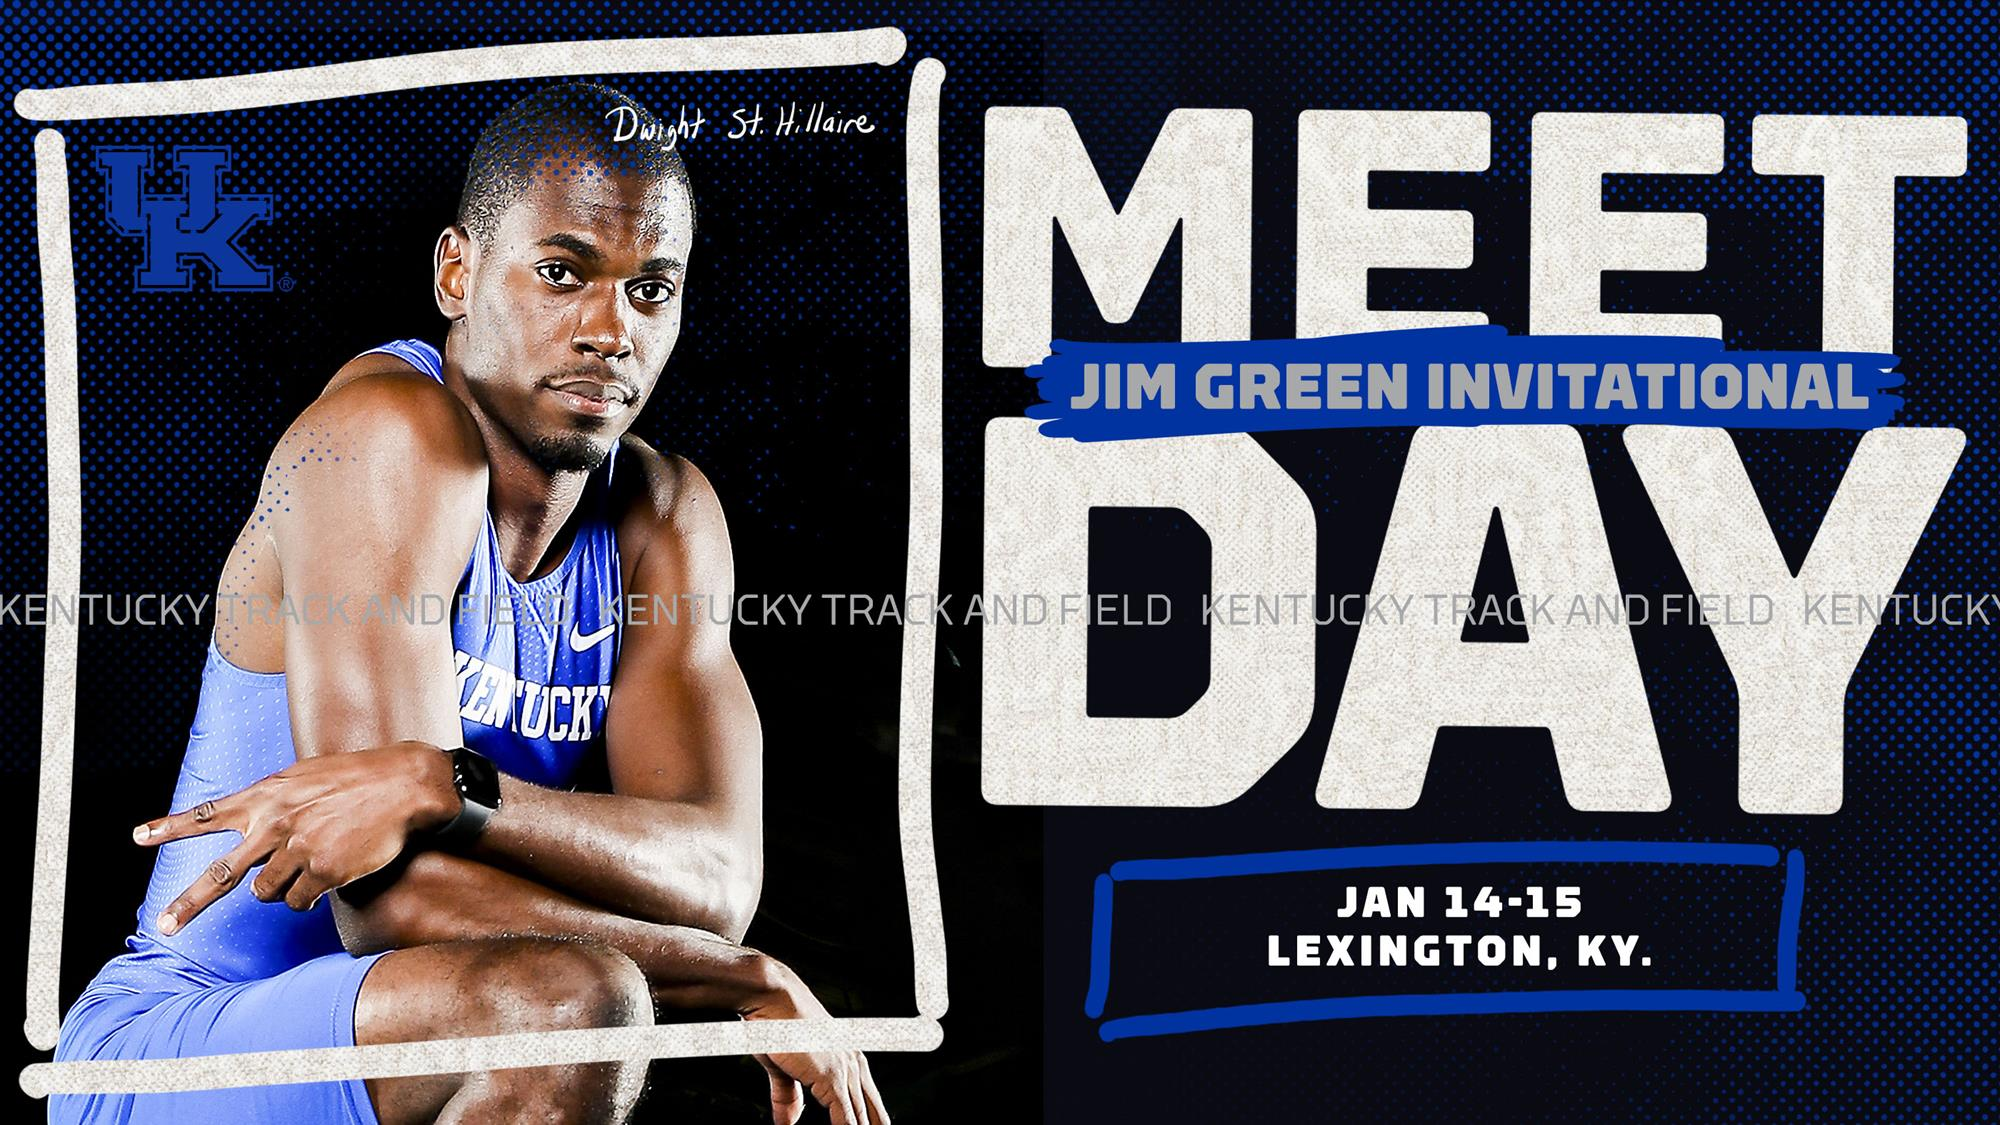 Kentucky Track & Field Set to Host Jim Green Invitational